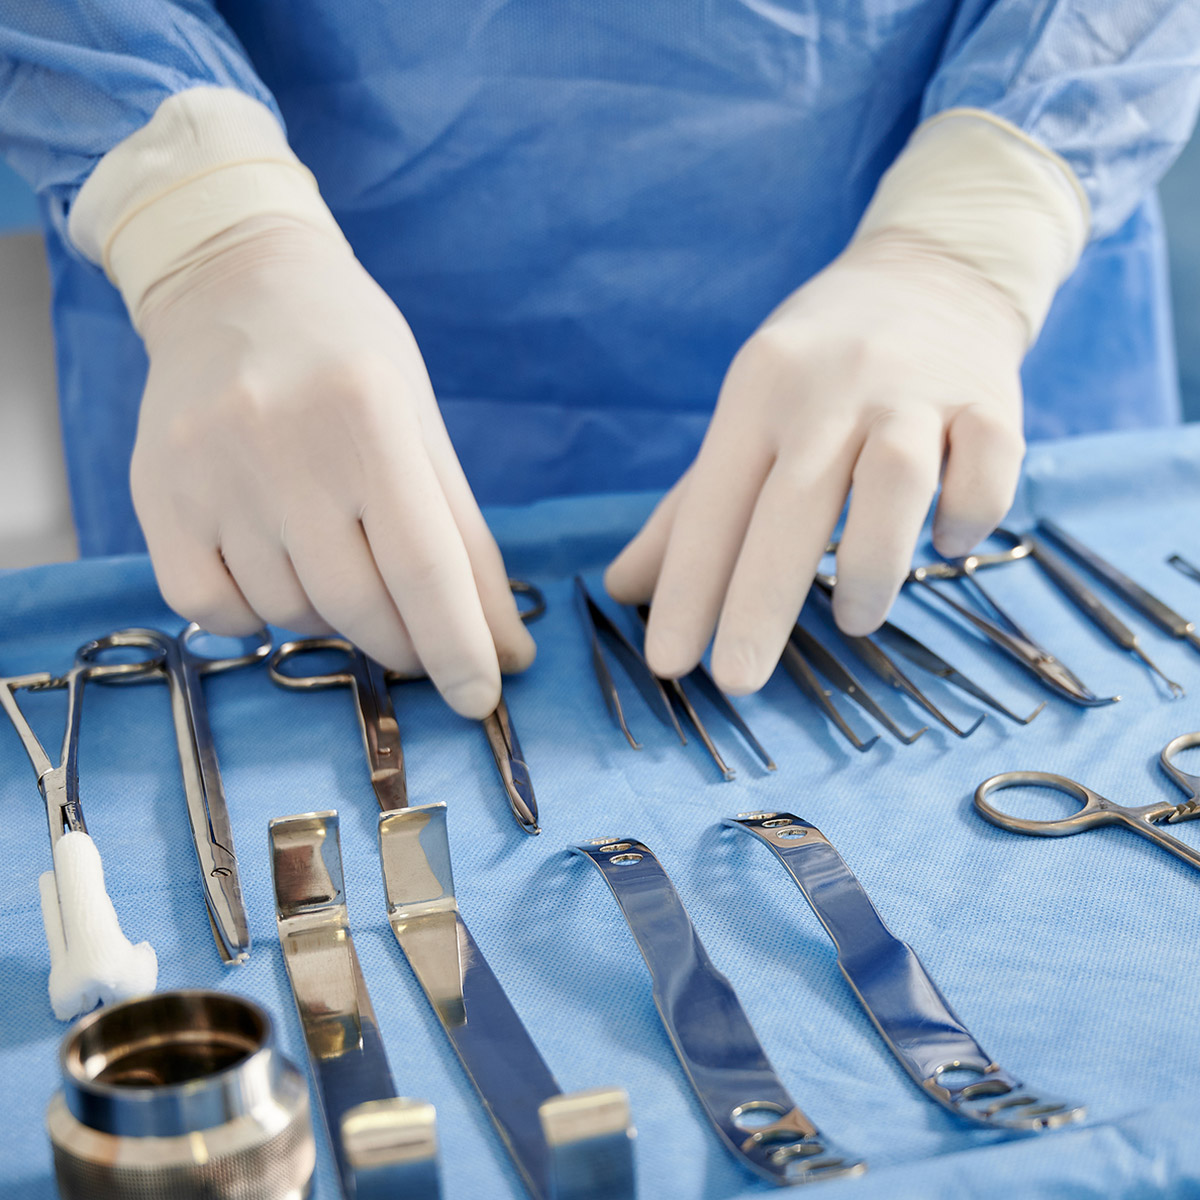 sterilized medical equipment